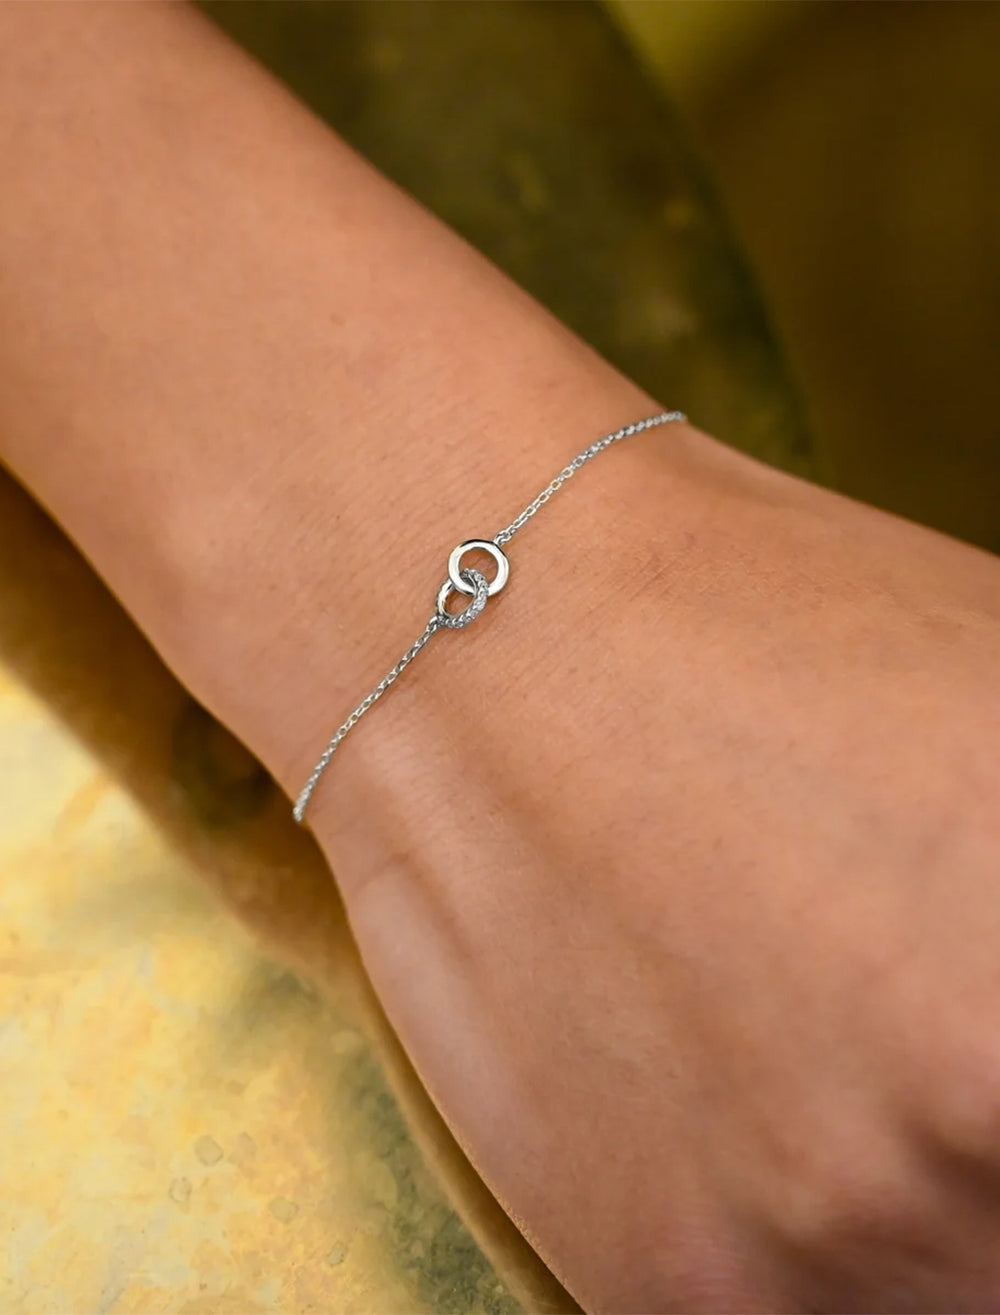 Model wearing Adina Reyter's pave interlocking loop bracelet in silver.